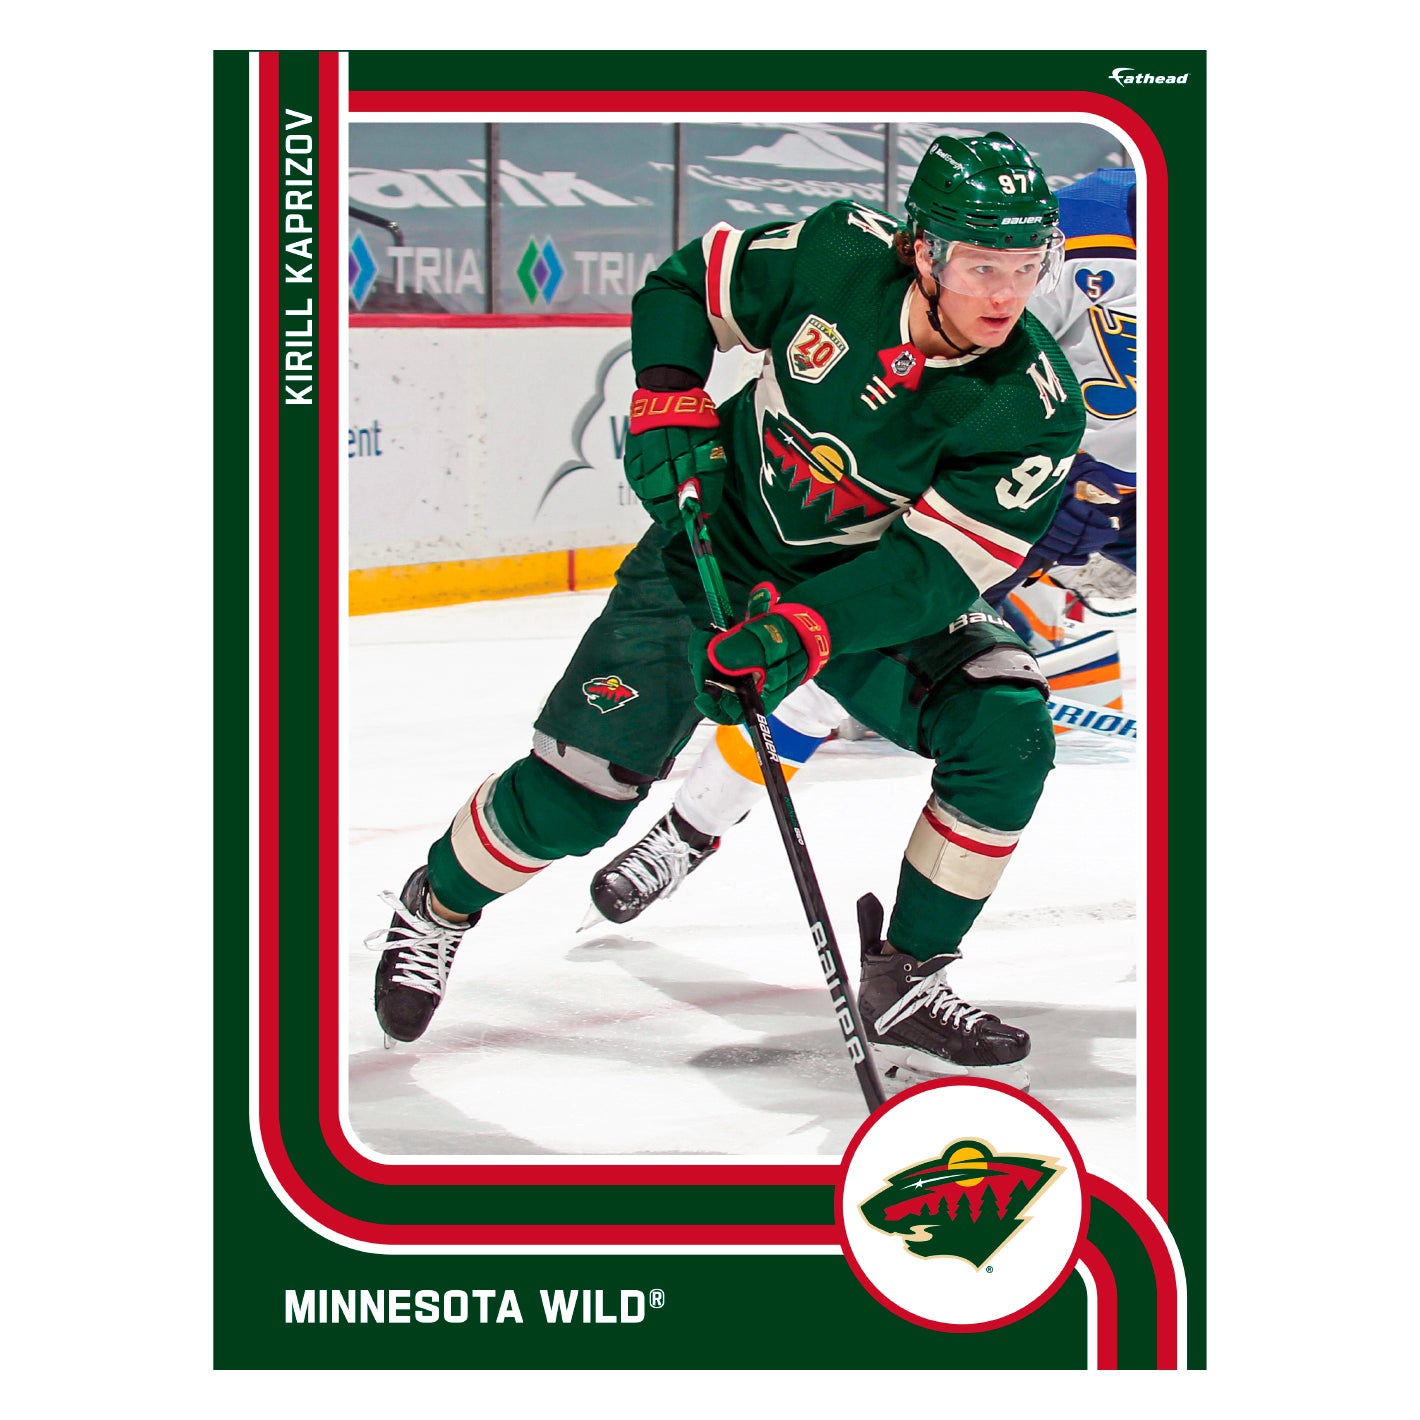 Minnesota Wild NHL Hockey Team Logo Poster - Official Merchandise